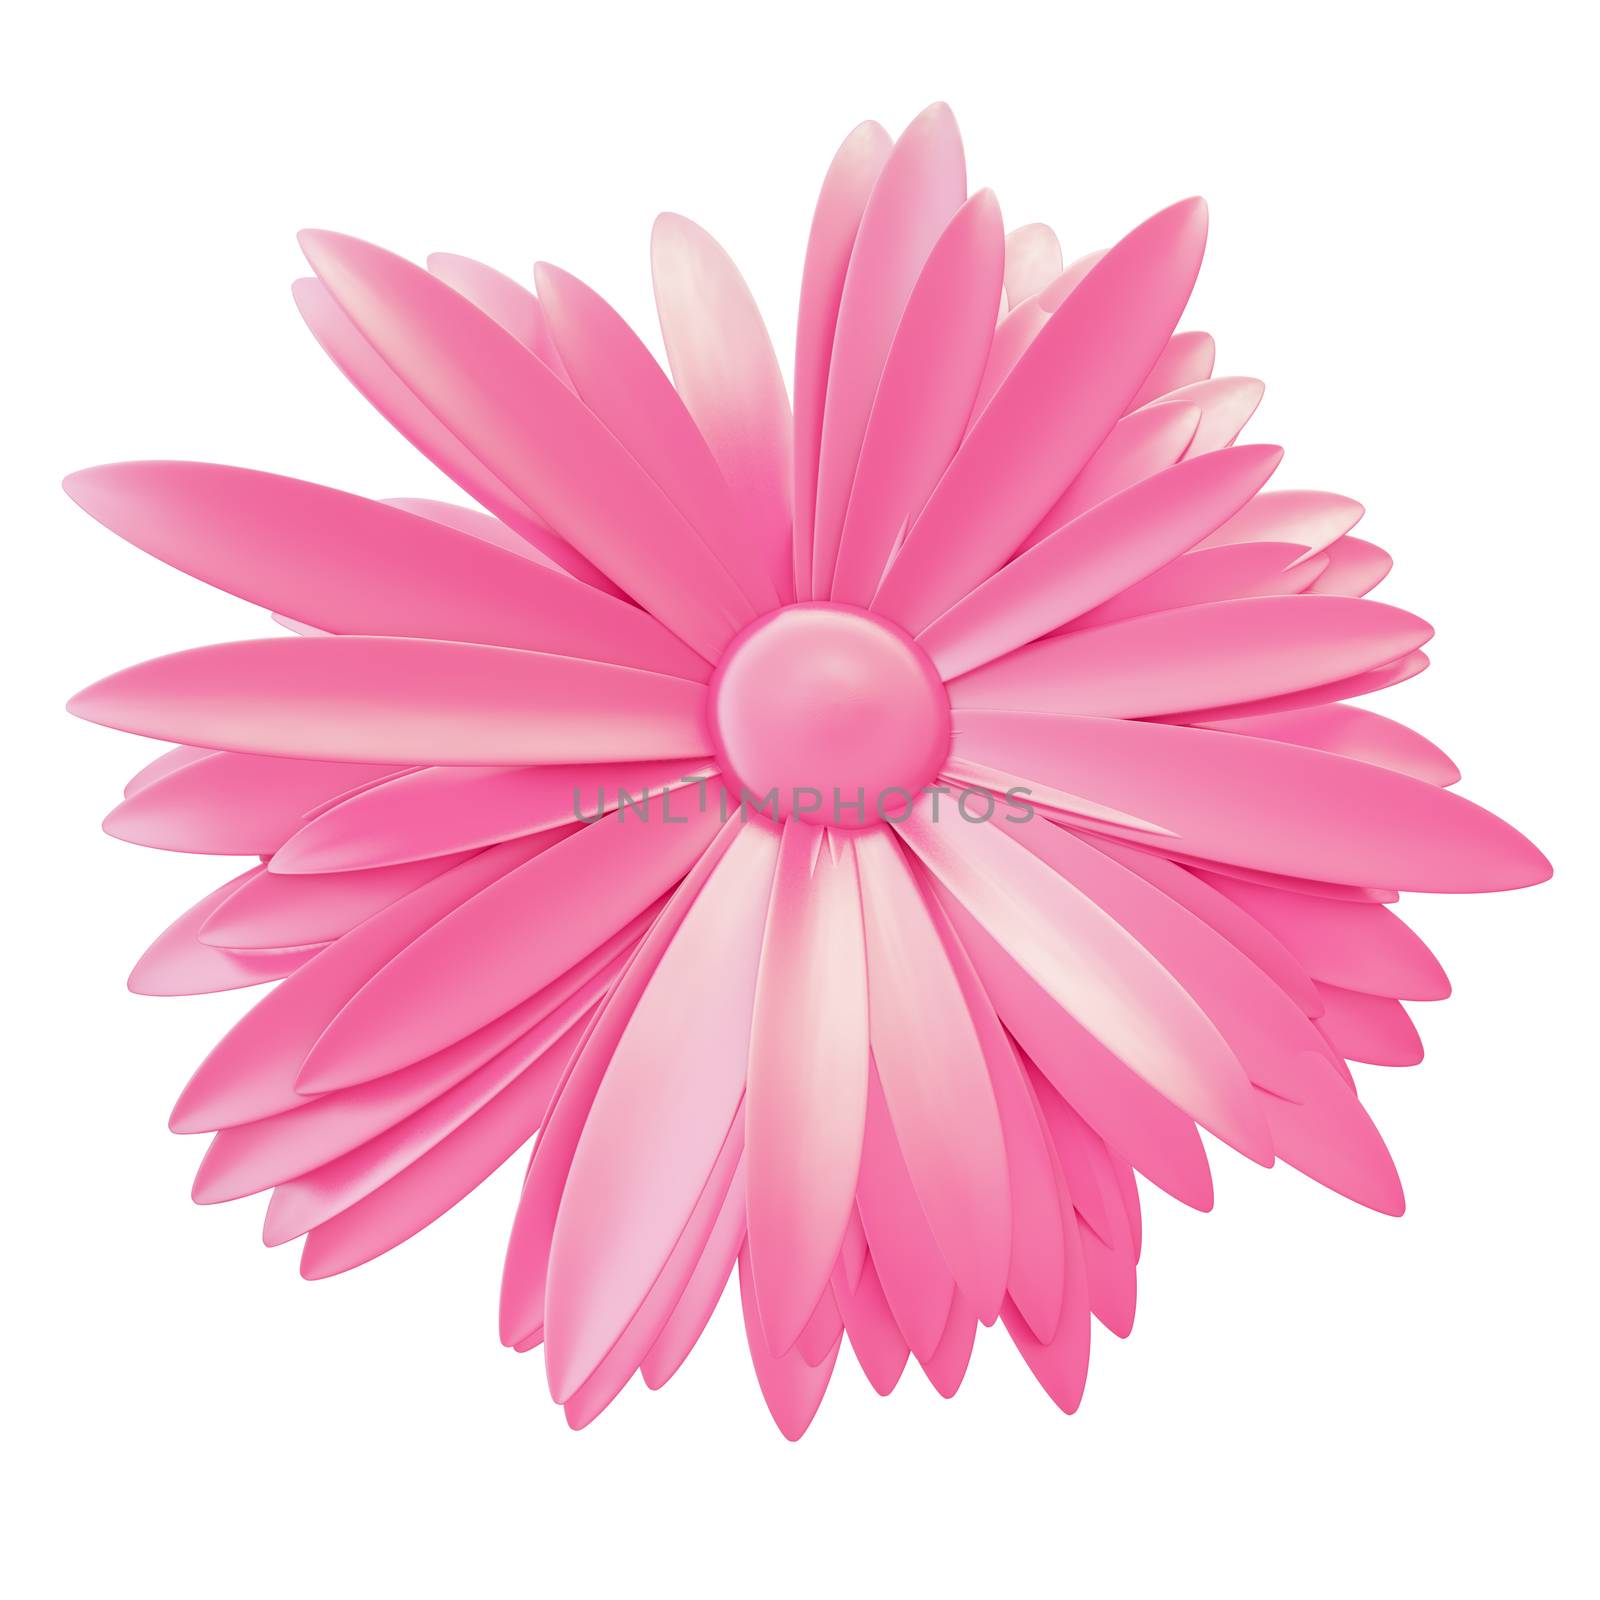 Light Pink Flower isolated on white background. 3d illustration